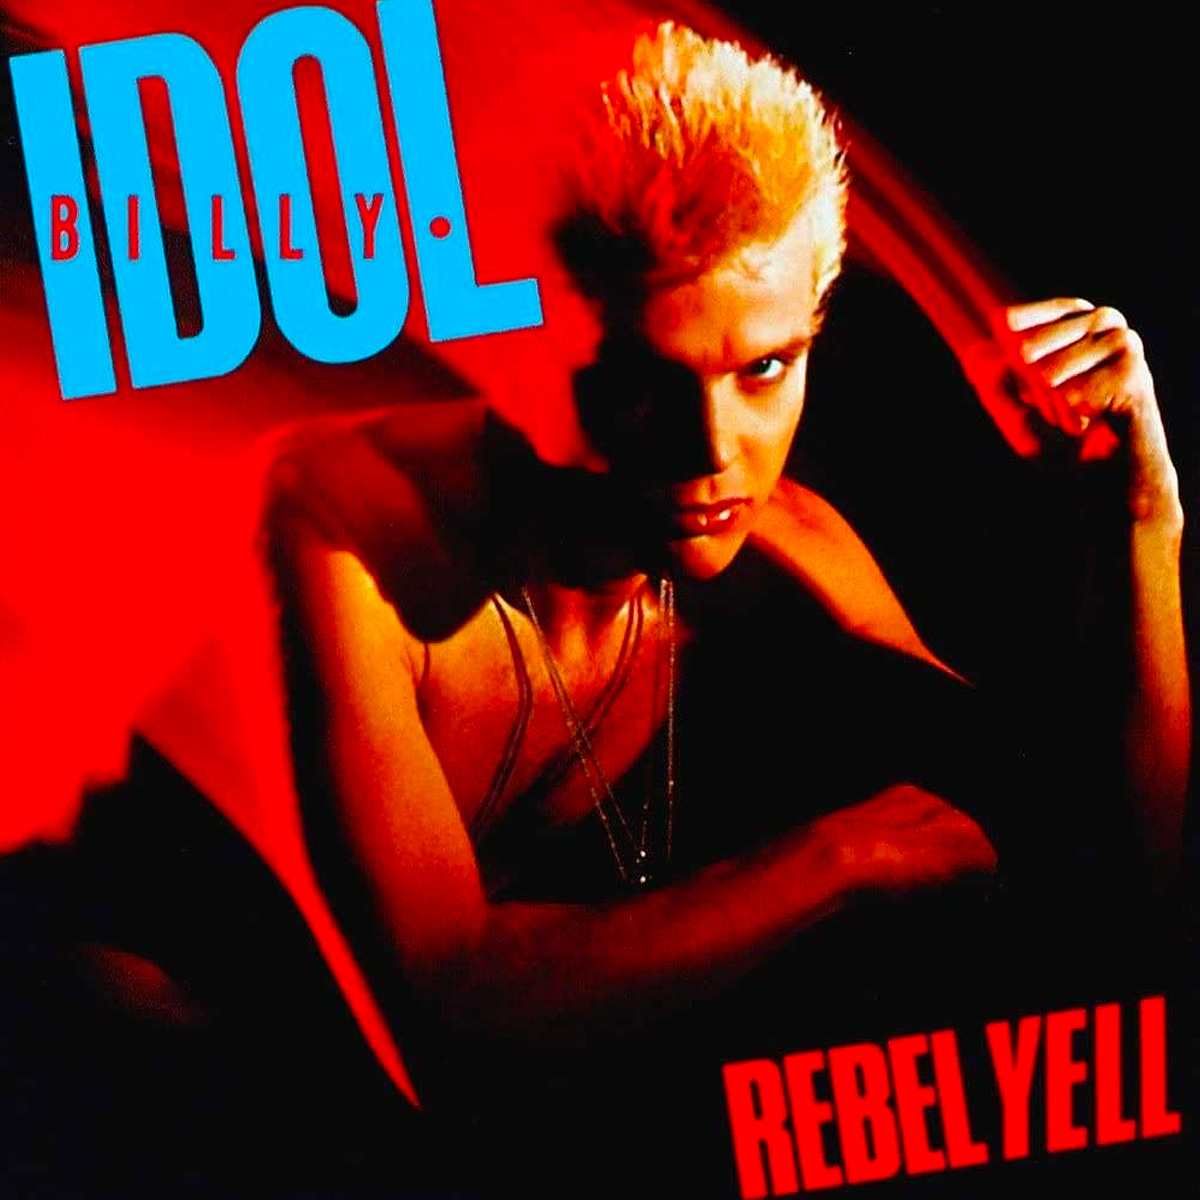 Rebel Yell cd cover